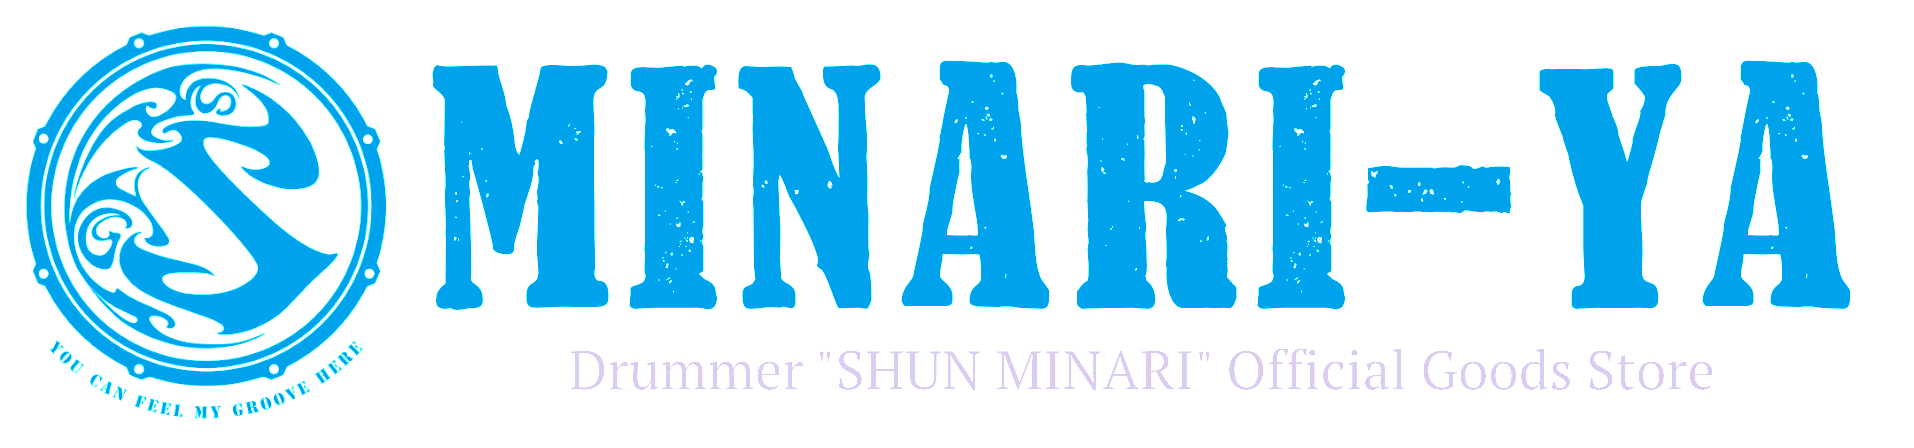 SHUN MINARI OFFICIAL GOODS STORE "MINARI-YA"